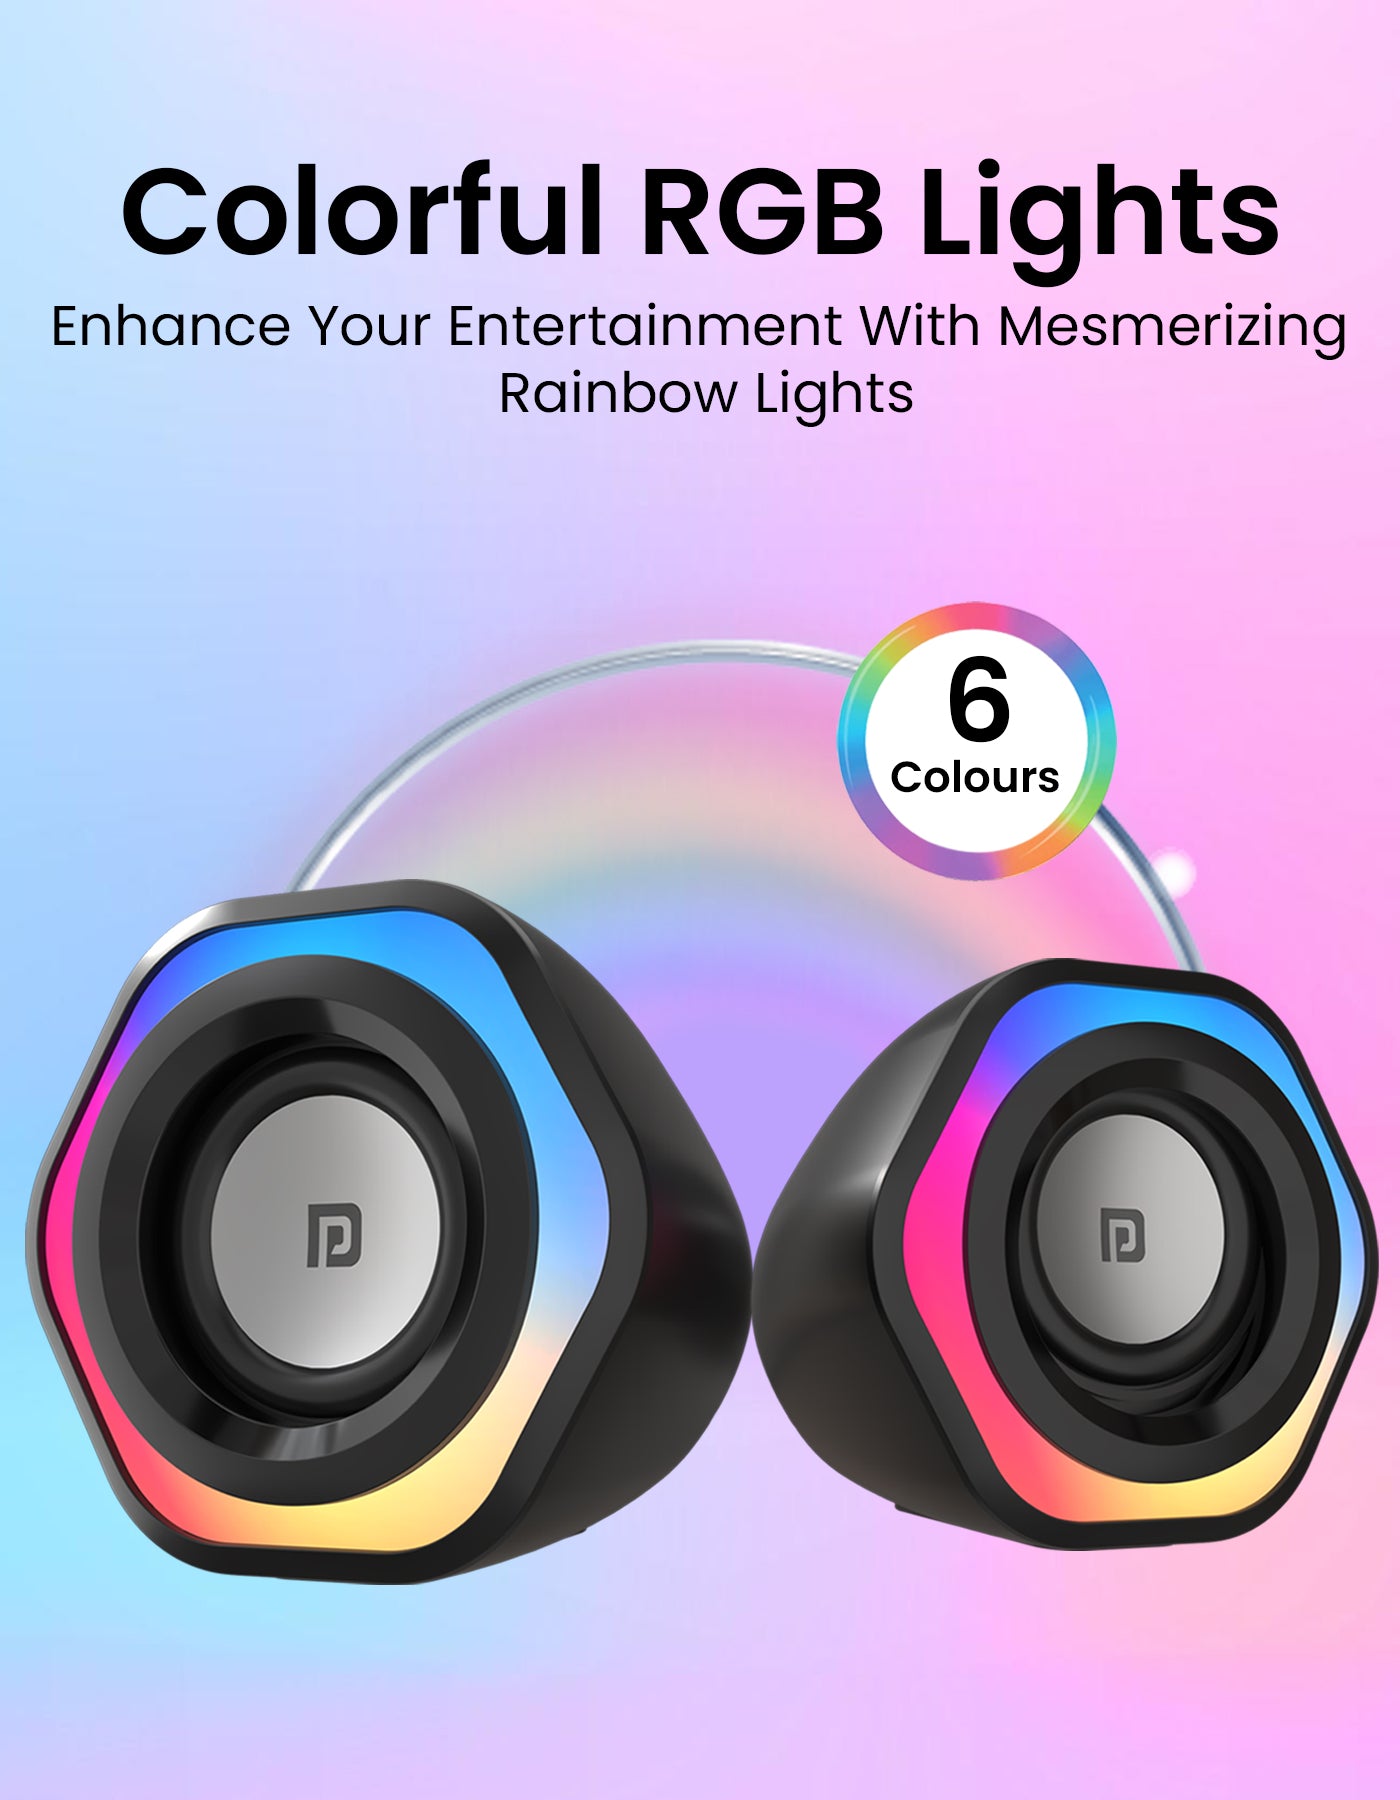 Portronics In Tune 4 Portable speaker Soundbar has RGB lights